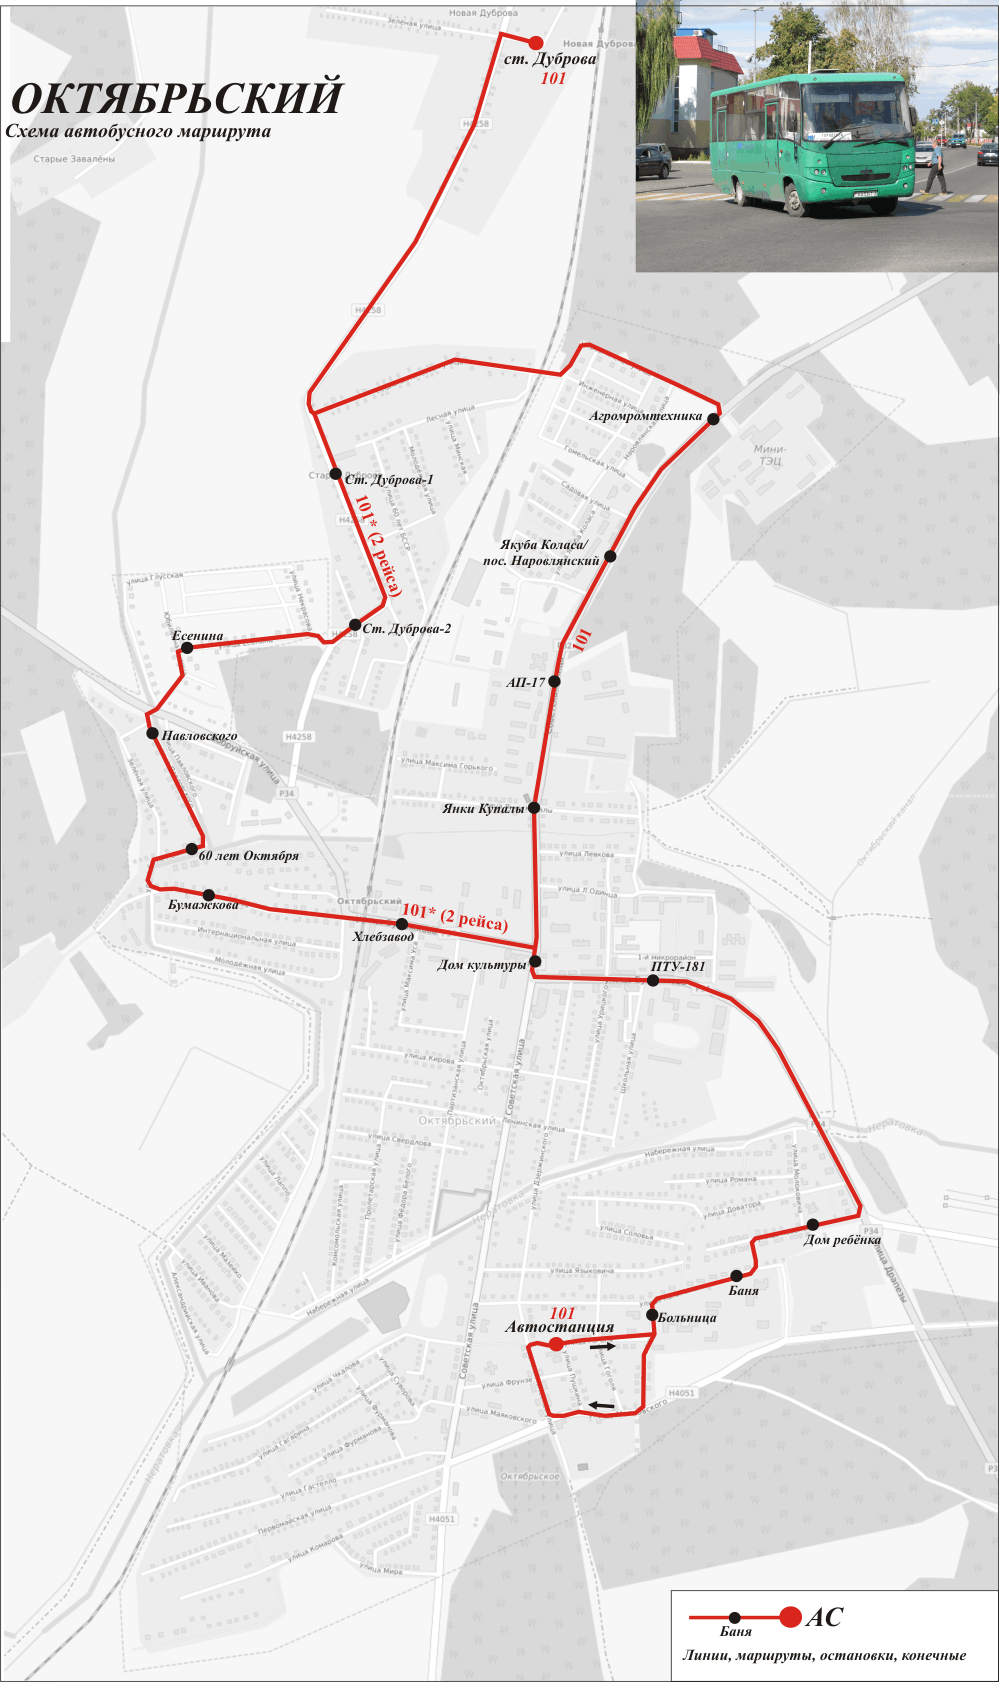 Aktsyabarski — Maps; Maps routes